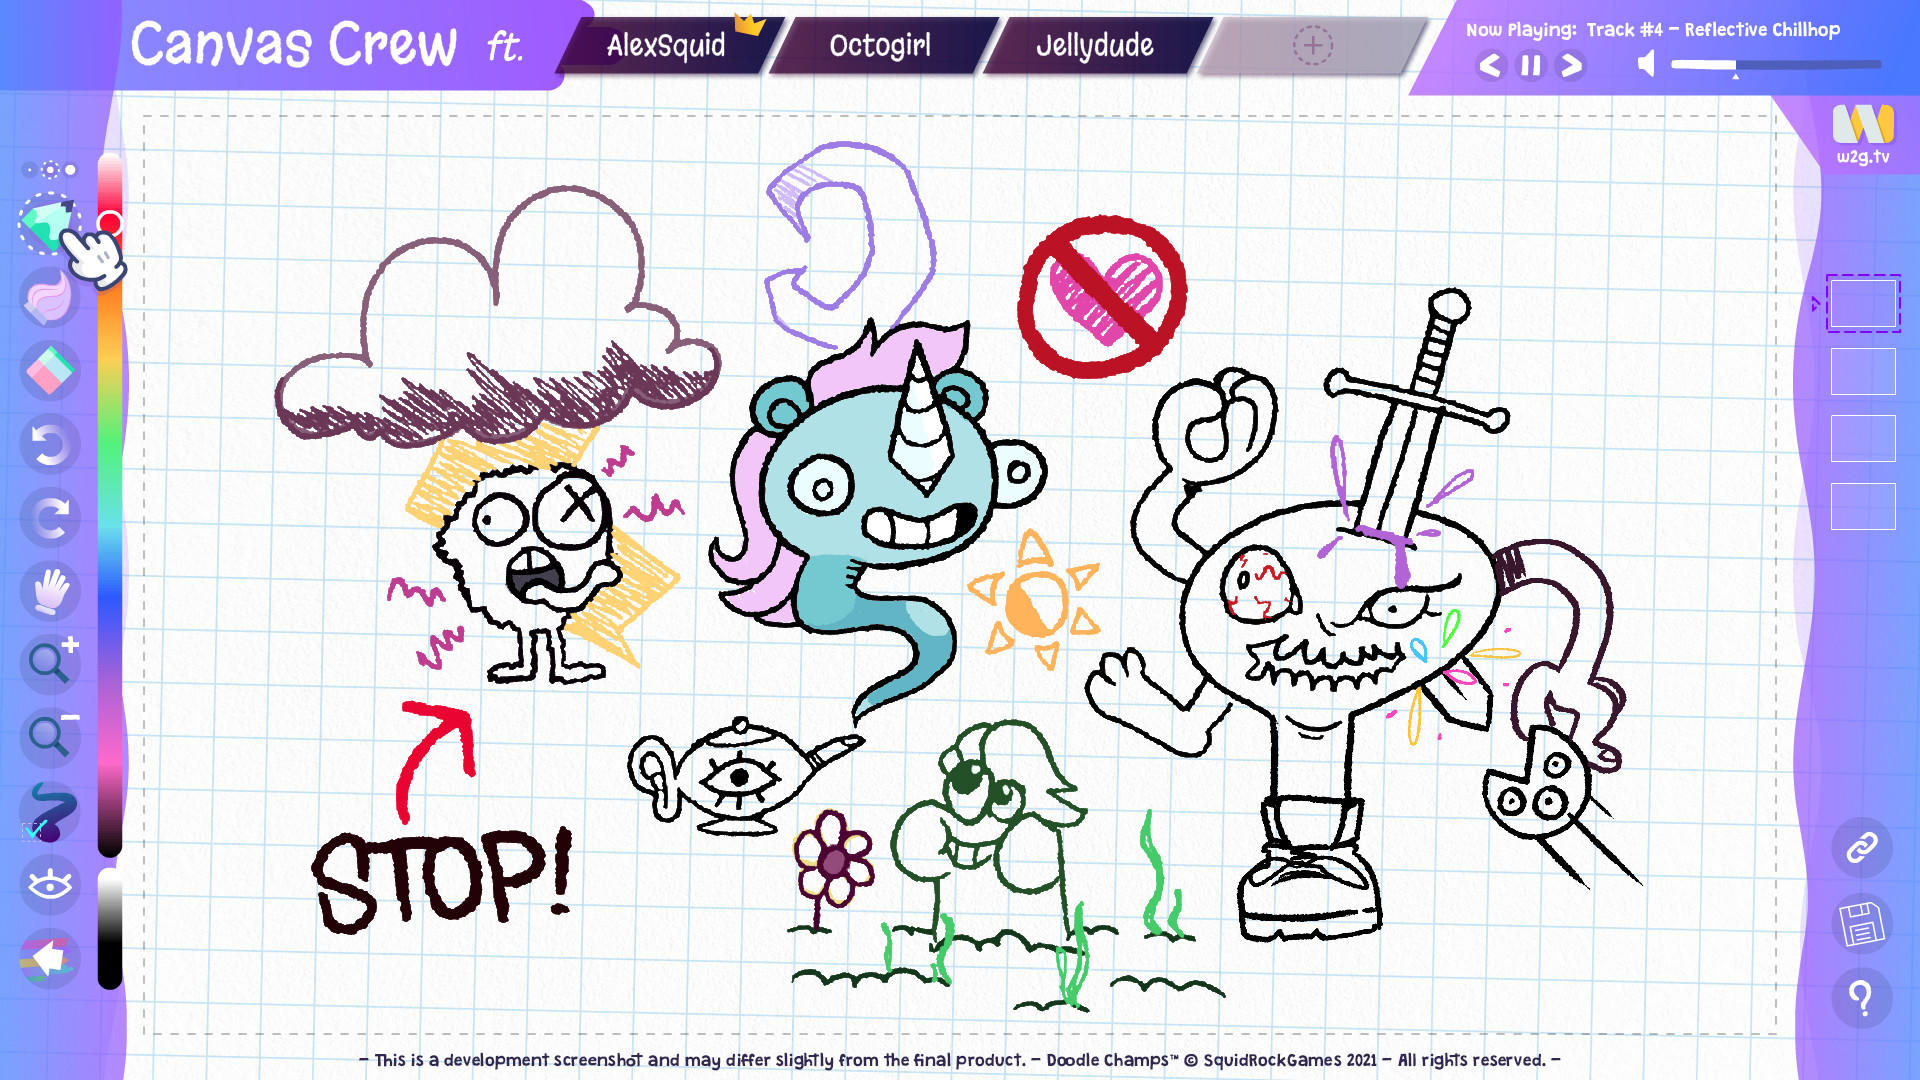 Screenshot of Doodle Champs